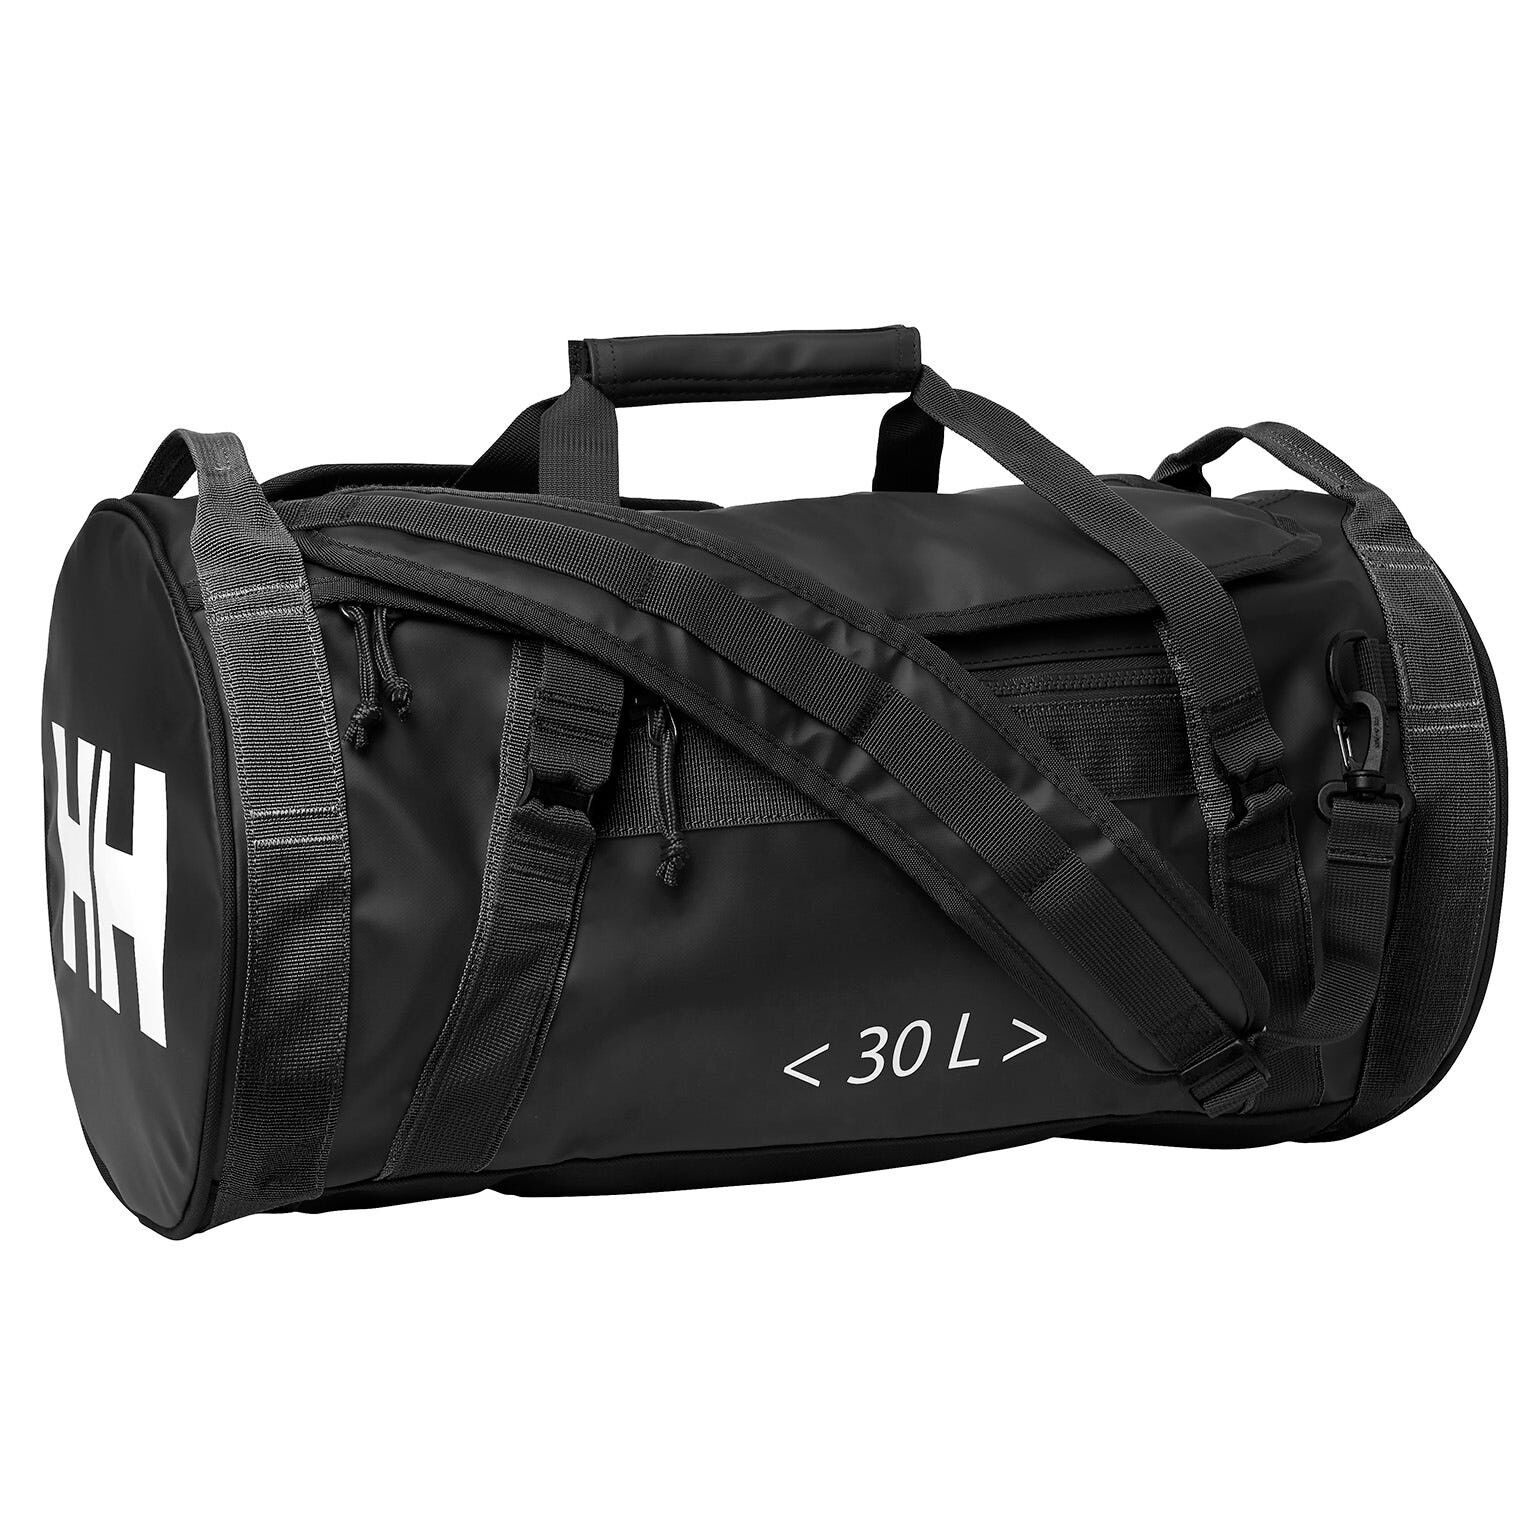 Helly Hansen HH Duffel Bag 2 30L - Travel bag